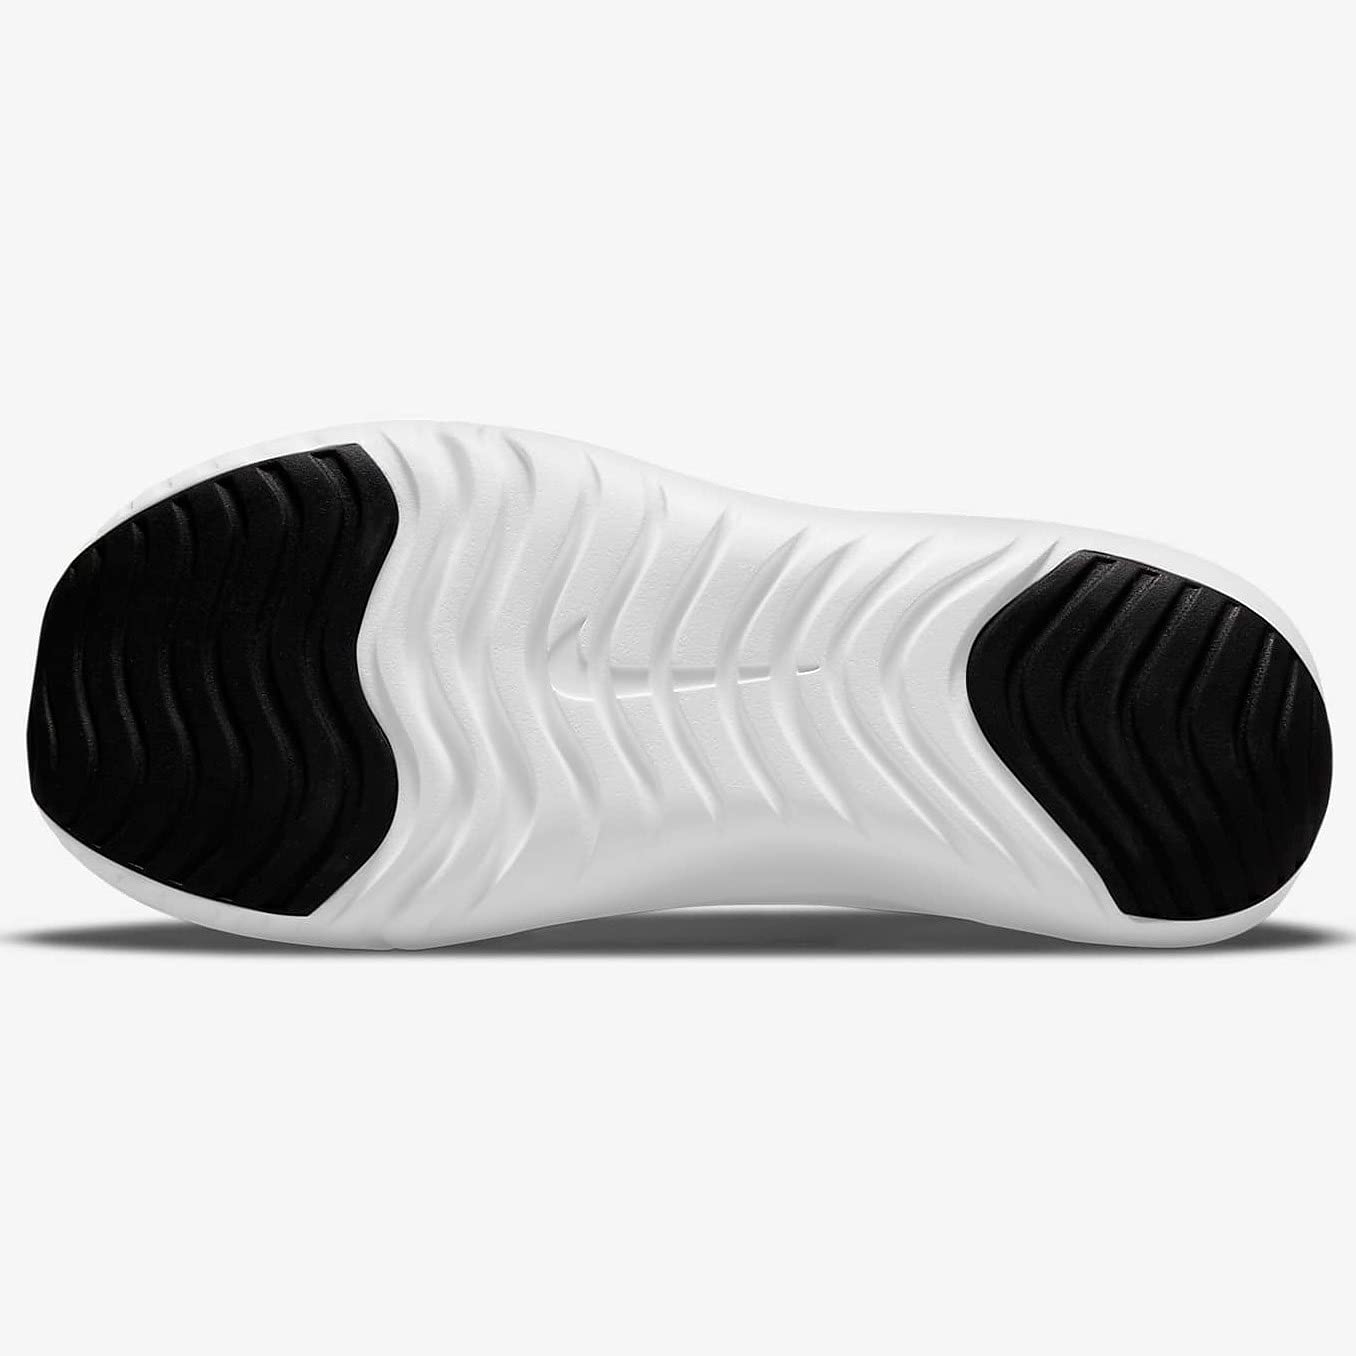 Nike Flex Plus Big Kids Casual Running Shoe Cw7415-003 Size 7 Black/White